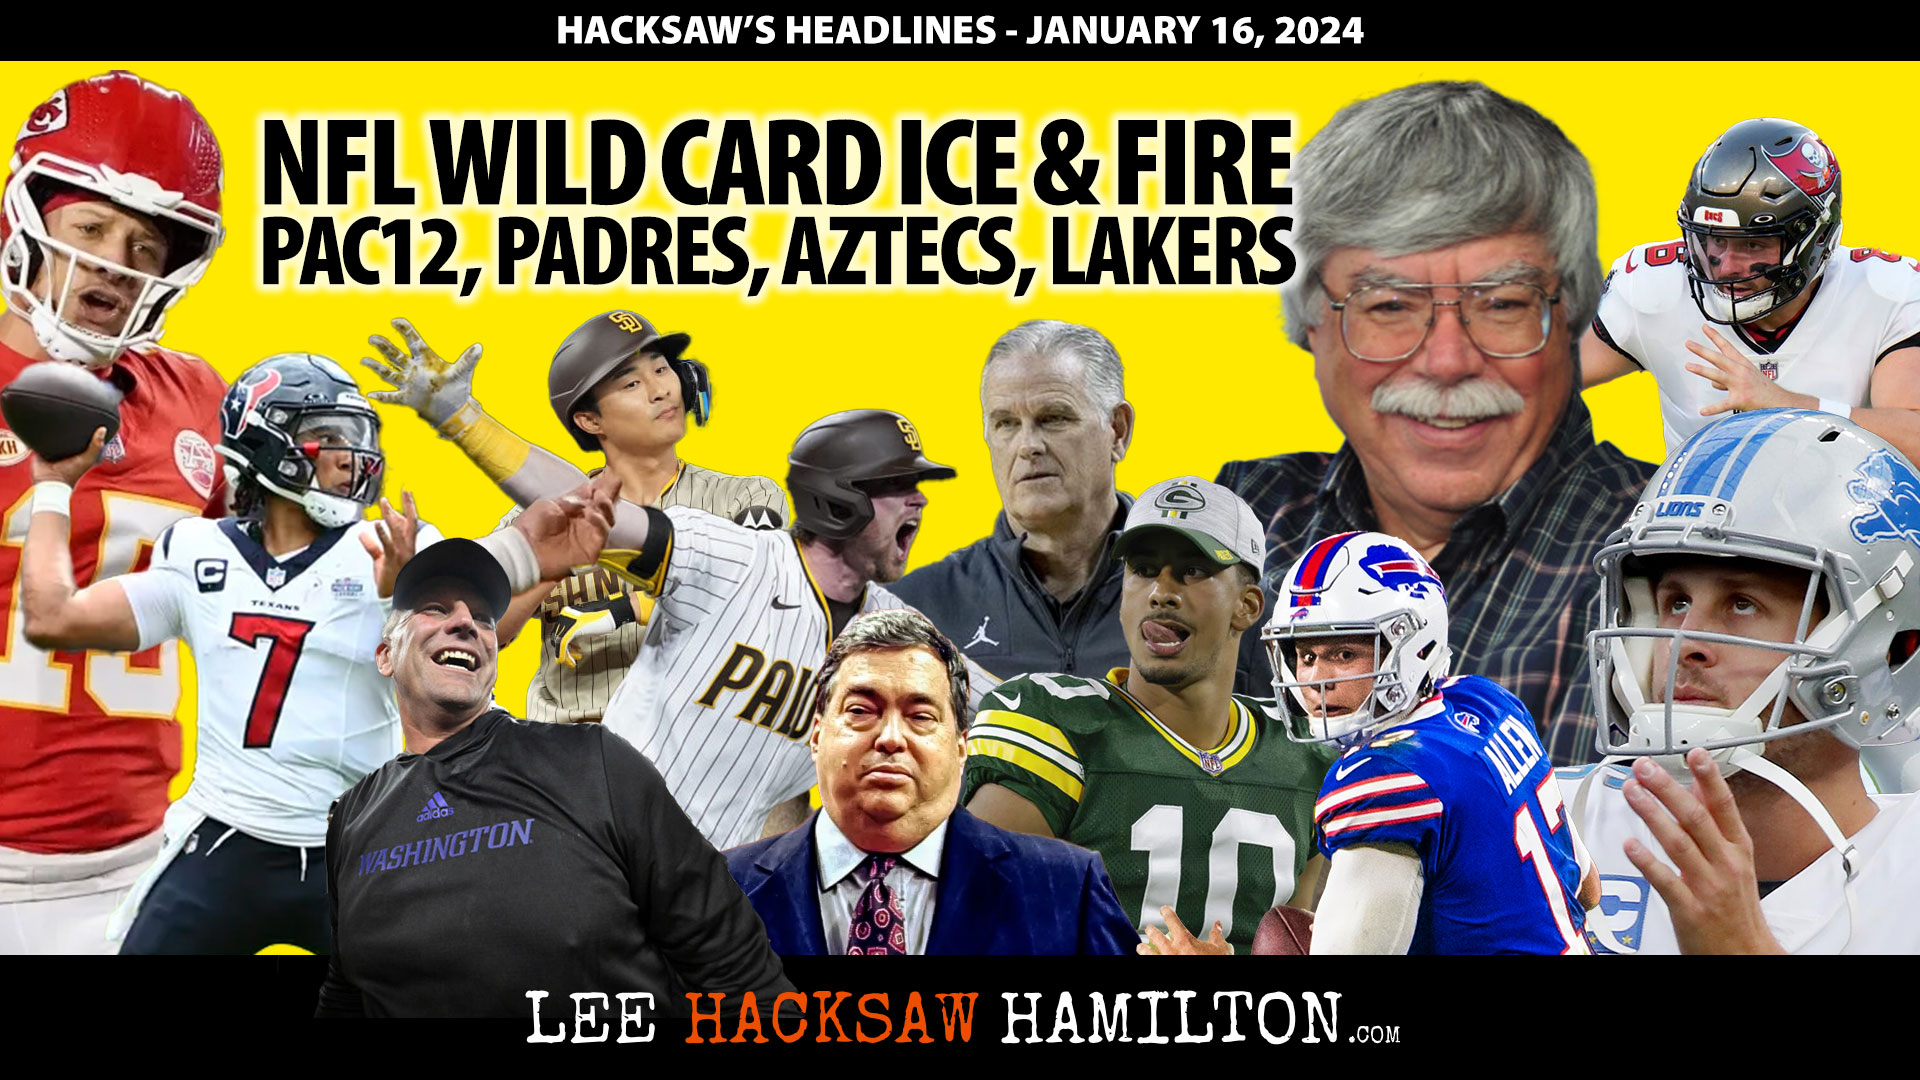 Lee Hacksaw Hamilton discusses NFL Wild Card Playoffs Recap, PAC12, Padres, Aztecs, Lakers, Bulls